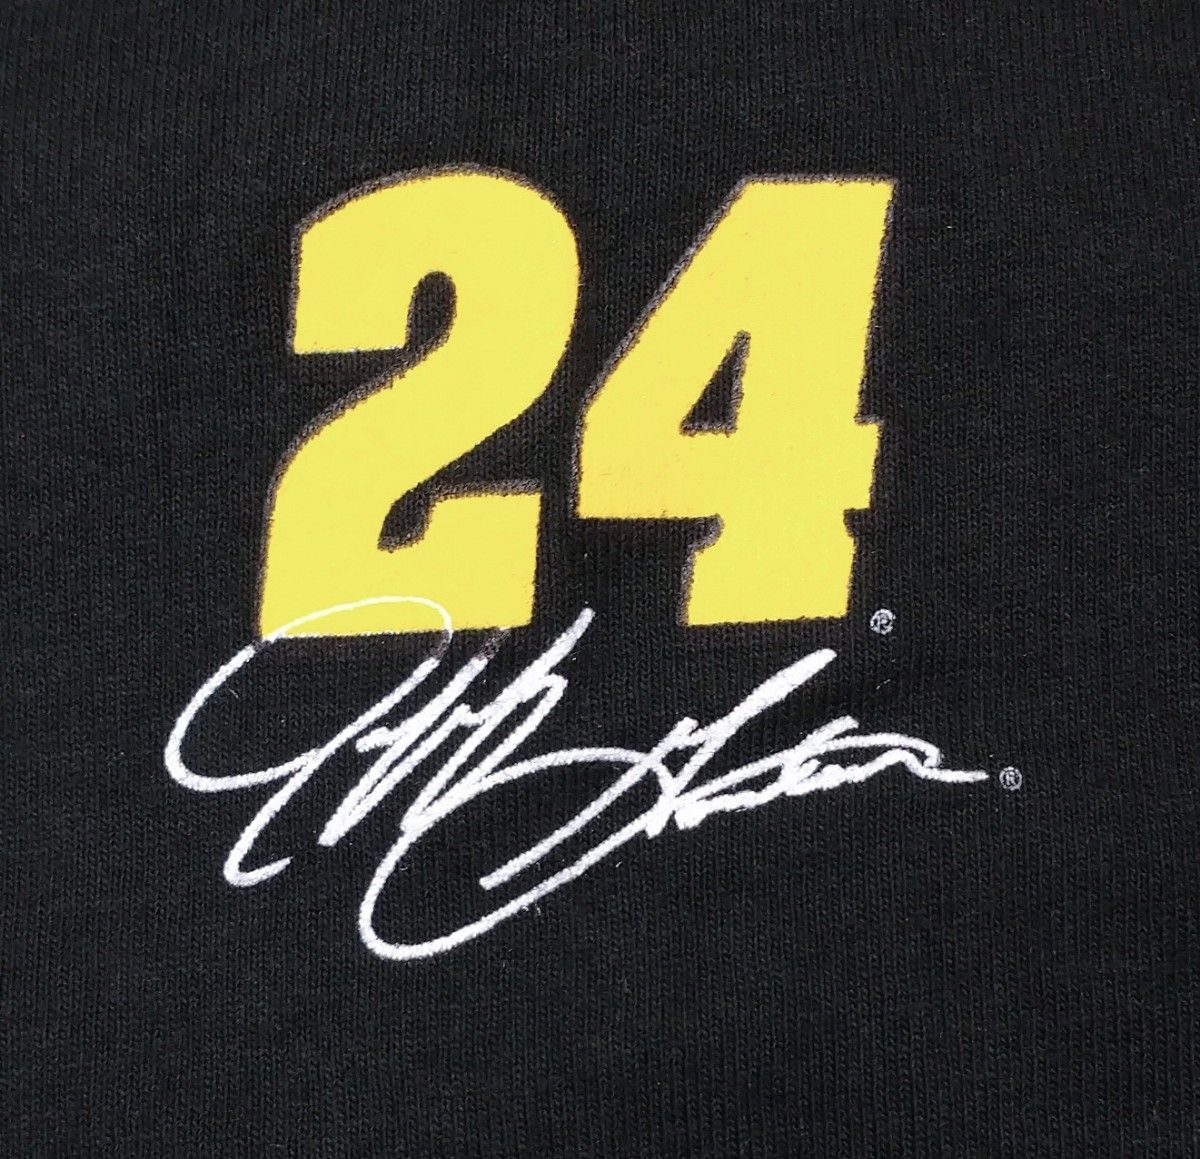 JEFF GORDON ジェフ・ゴードン NASCAR WINNER'S CIRCLE Tシャツ XL